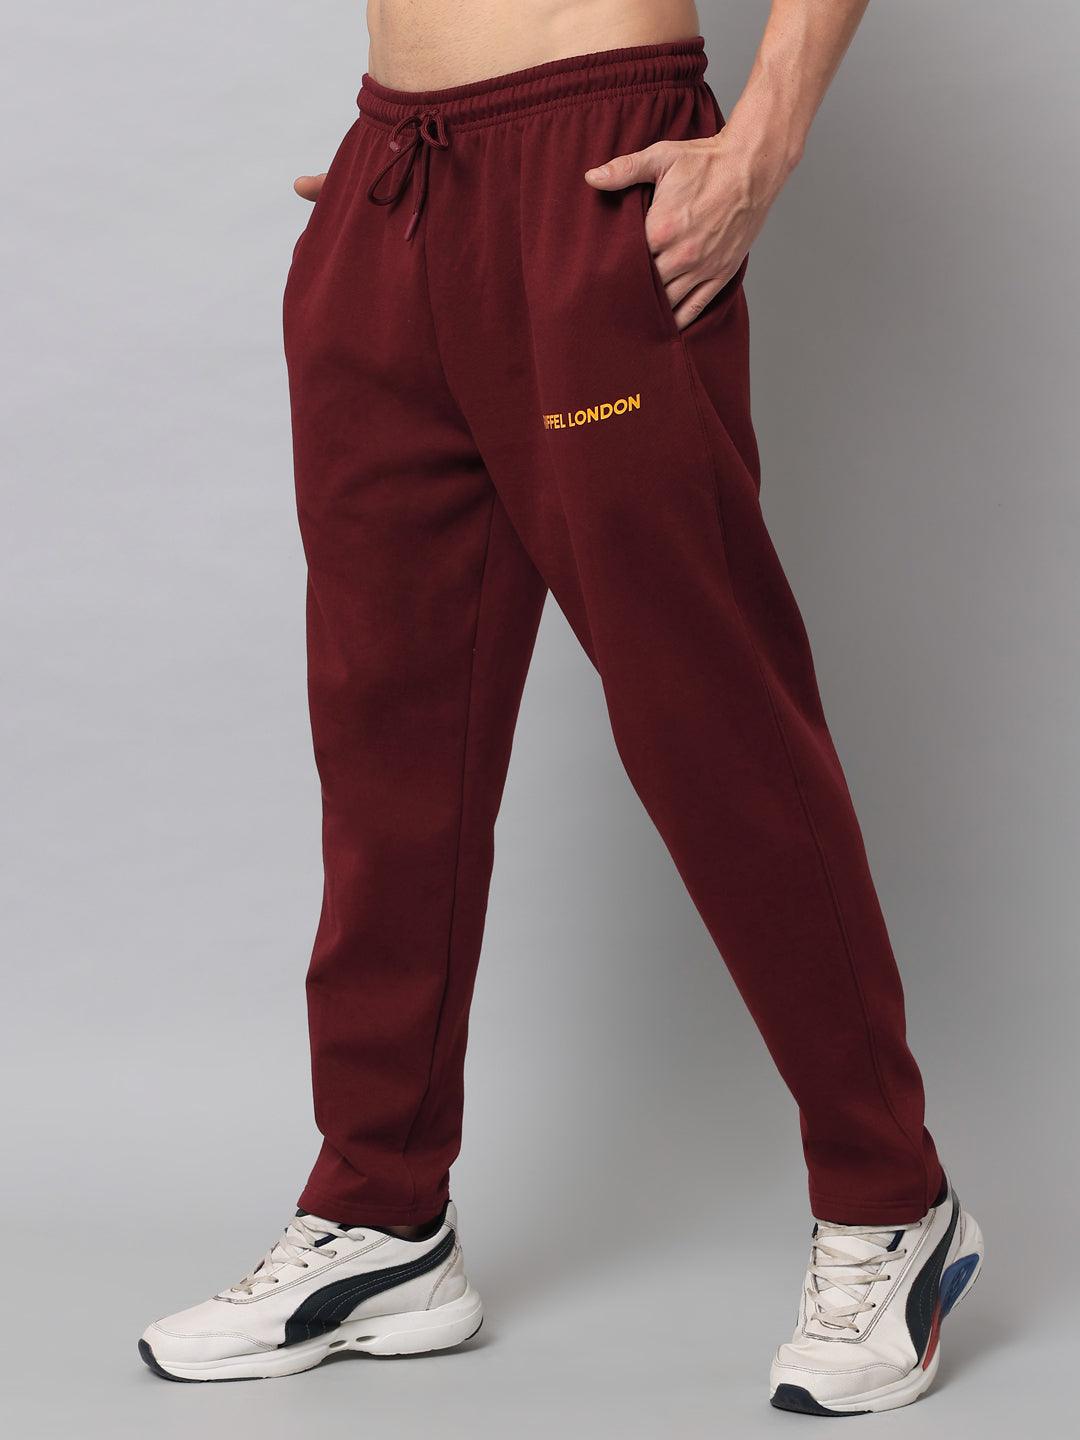 GRIFFEL Men Fleece Basic Solid Front Logo Maroon Trackpants - griffel